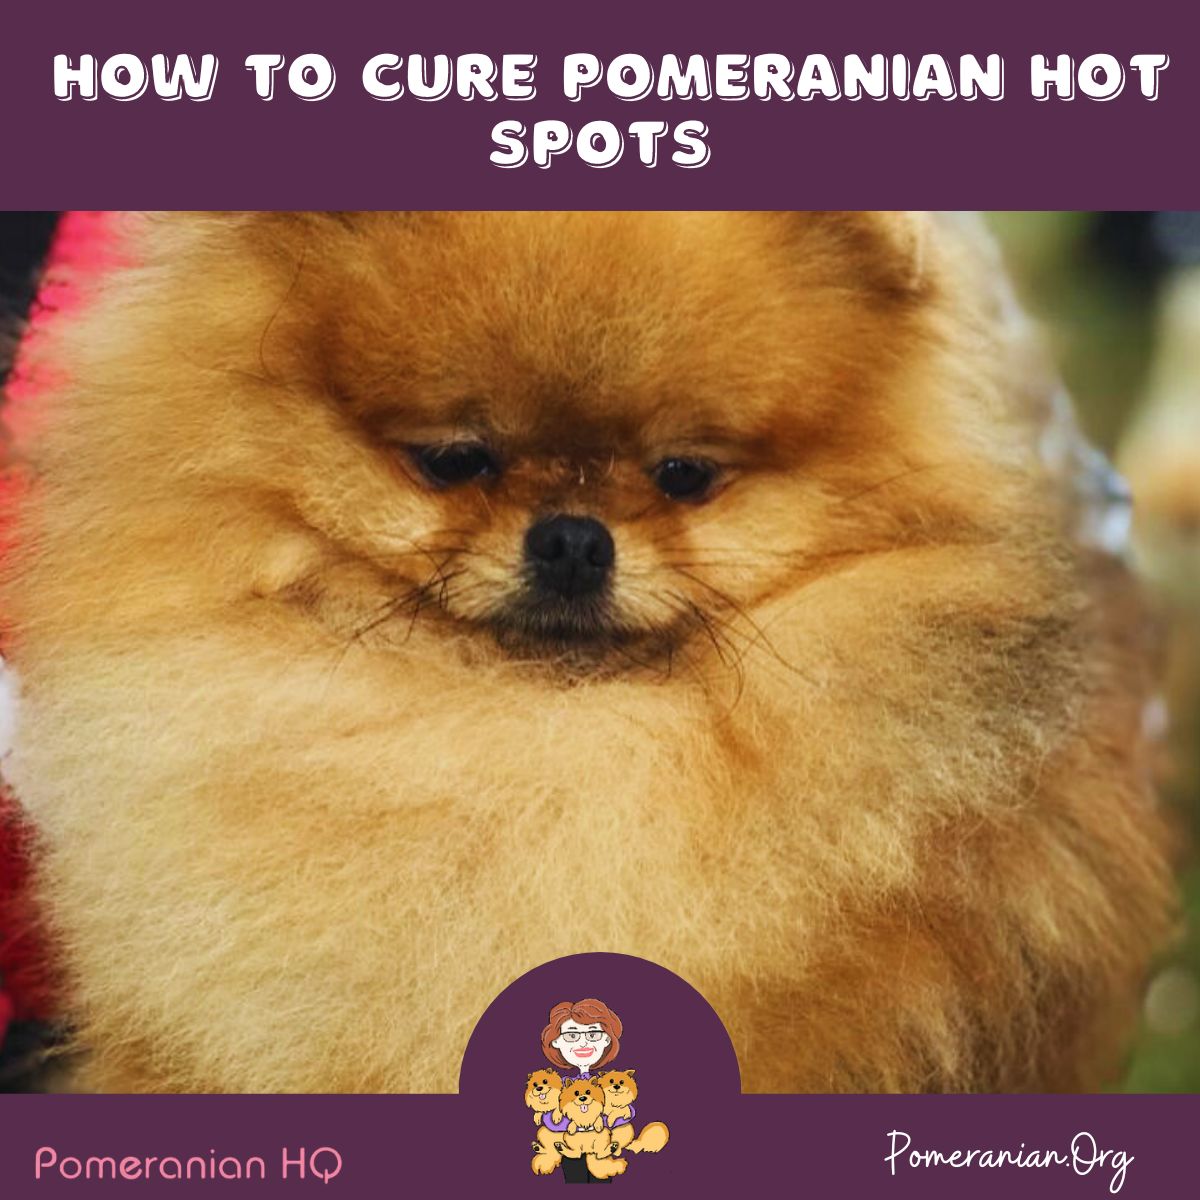 How to Cure Pomeranian Hot Spots